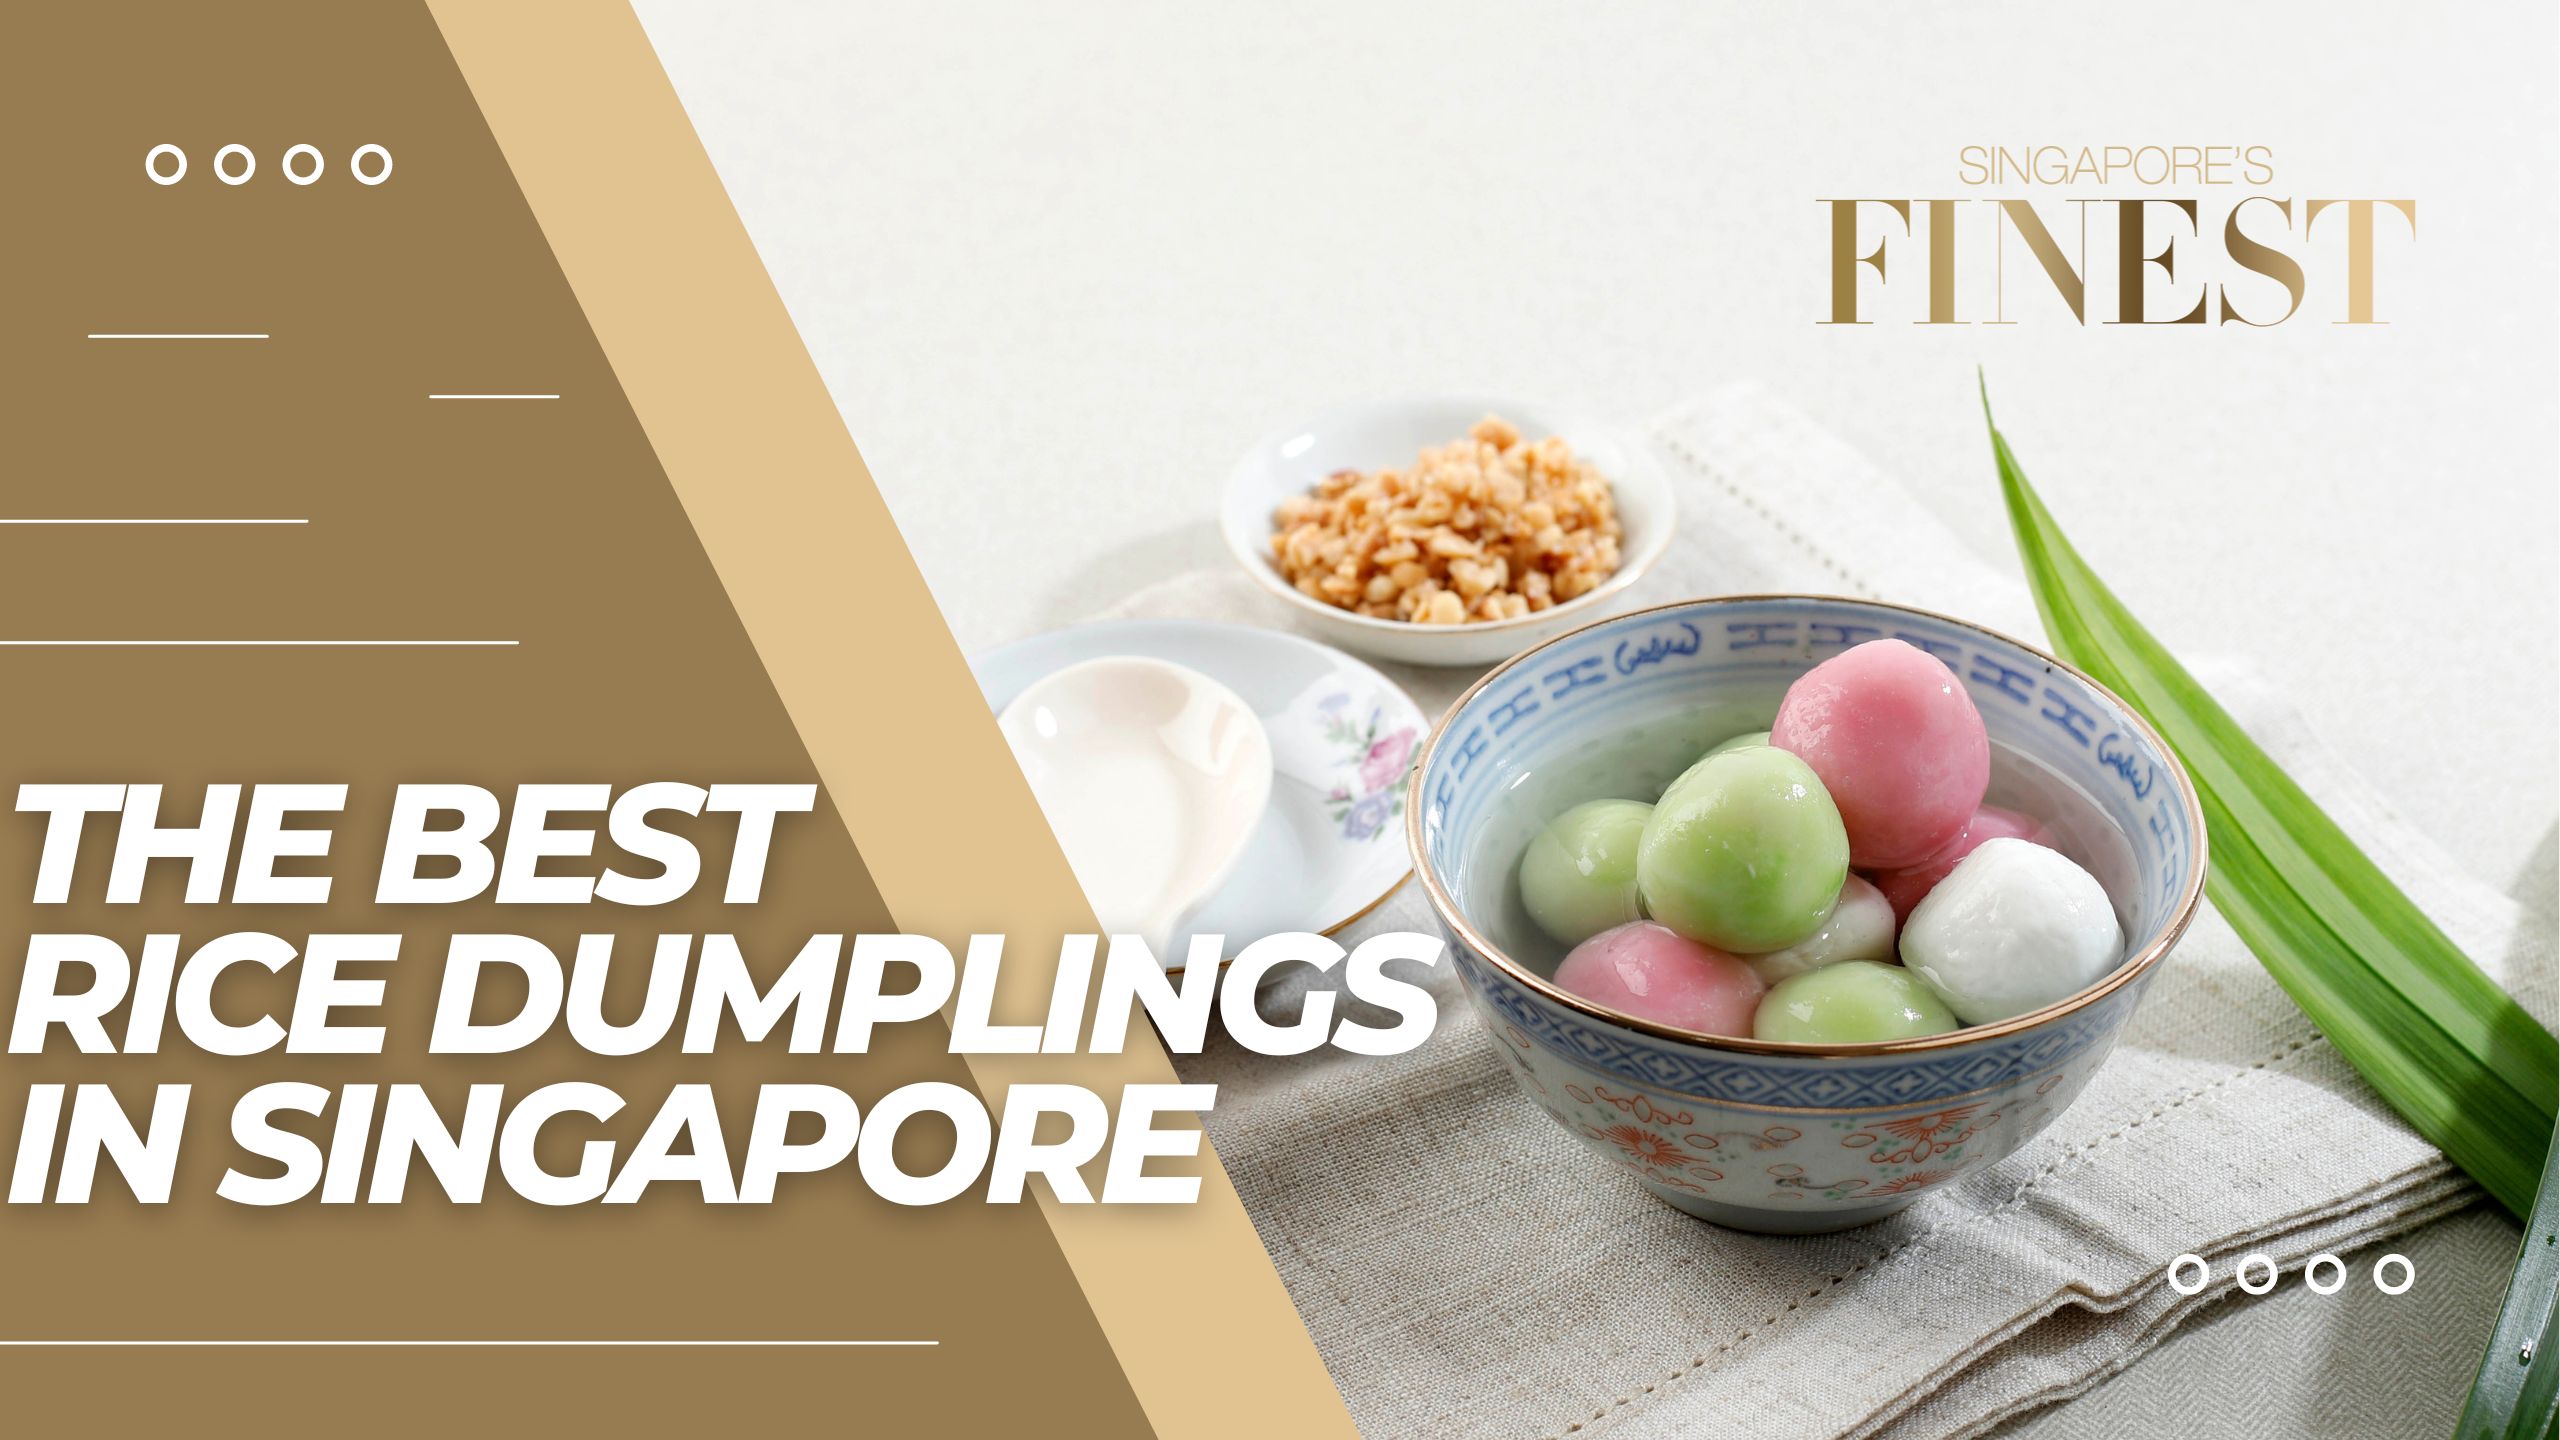 The Finest Rice Dumplings in Singapore